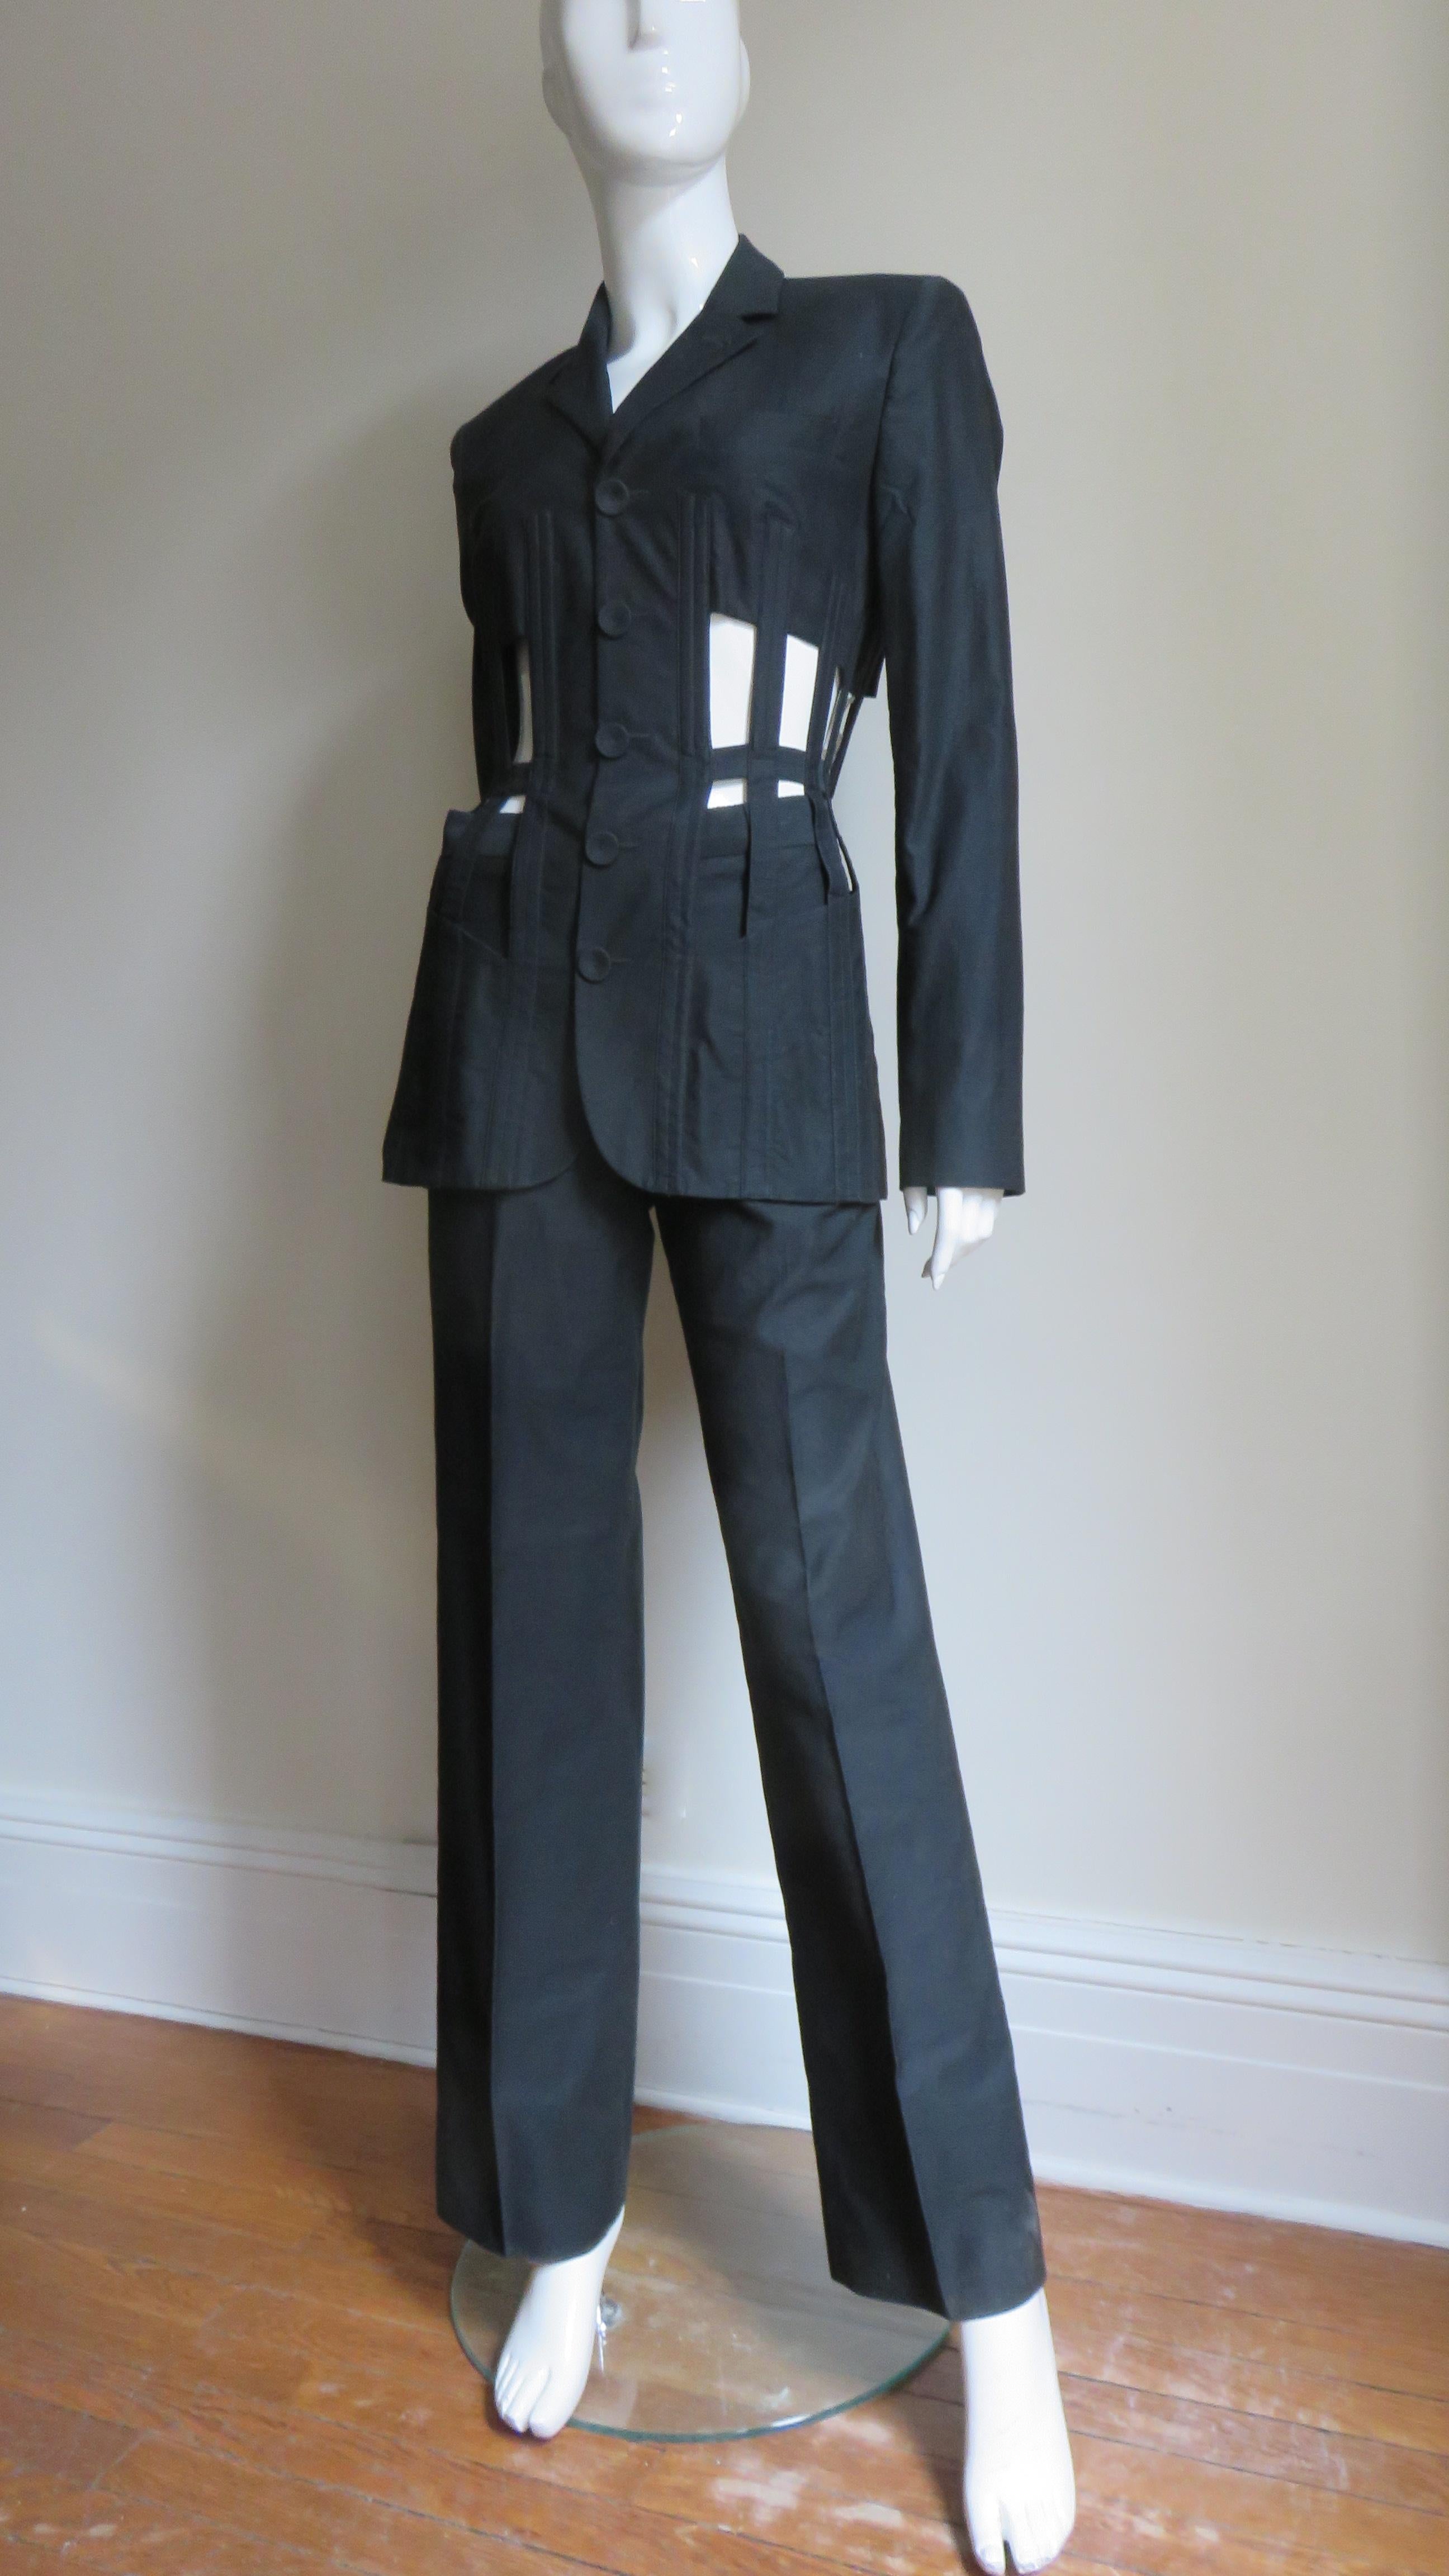 Jean Paul Gaultier Iconic Cage Corset lace up Jacket Pant Suit S/S 1989 For Sale 6